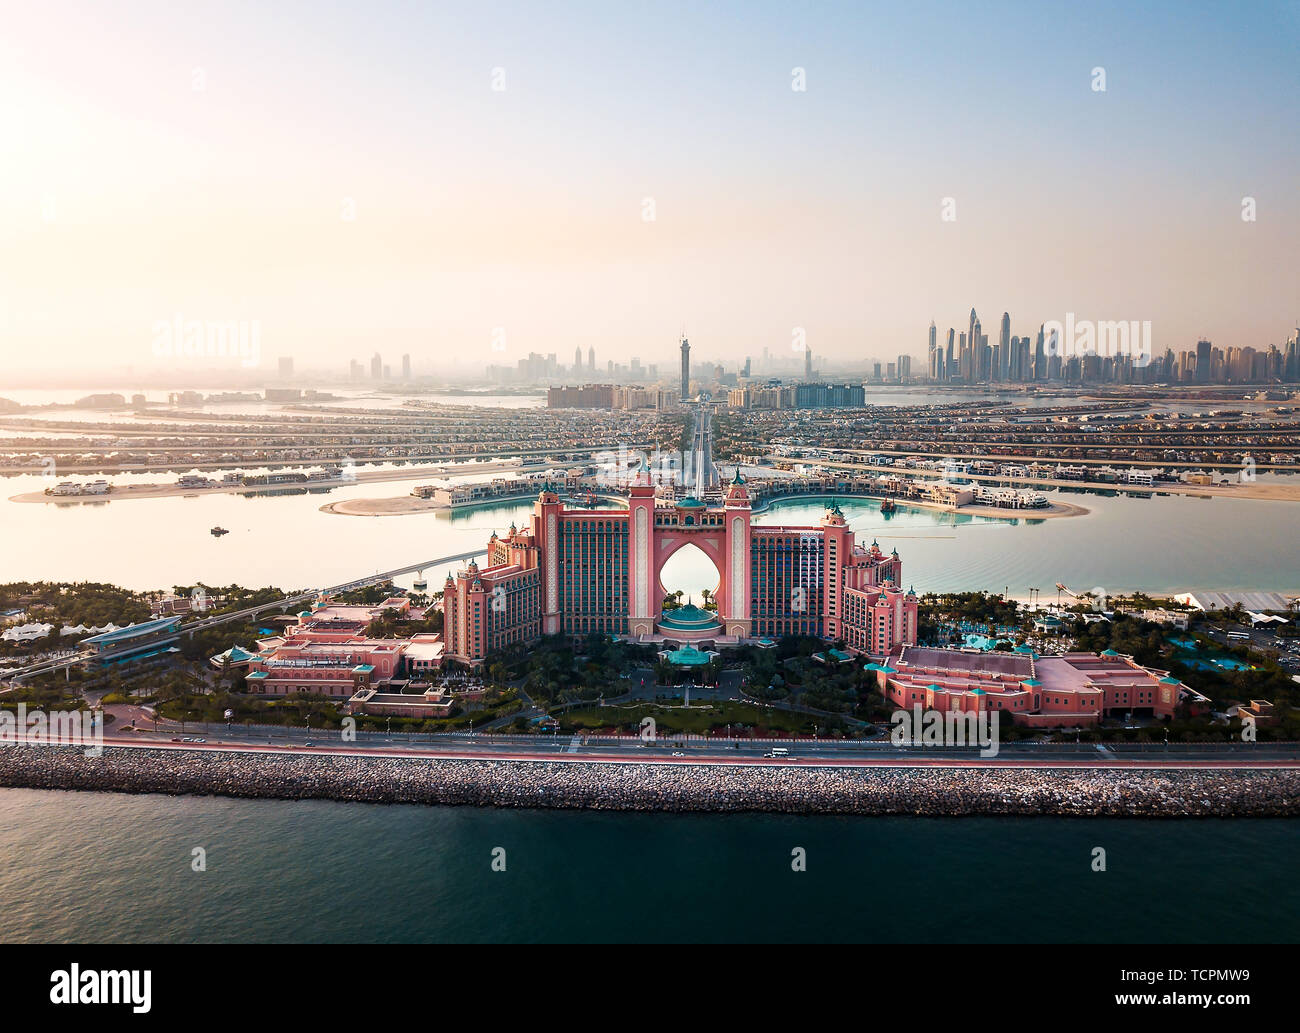 Dubai, United Arab Emirates - June 5, 2019: Atlantis hotel and the whole Palm island background in Dubai aerial view Stock Photo